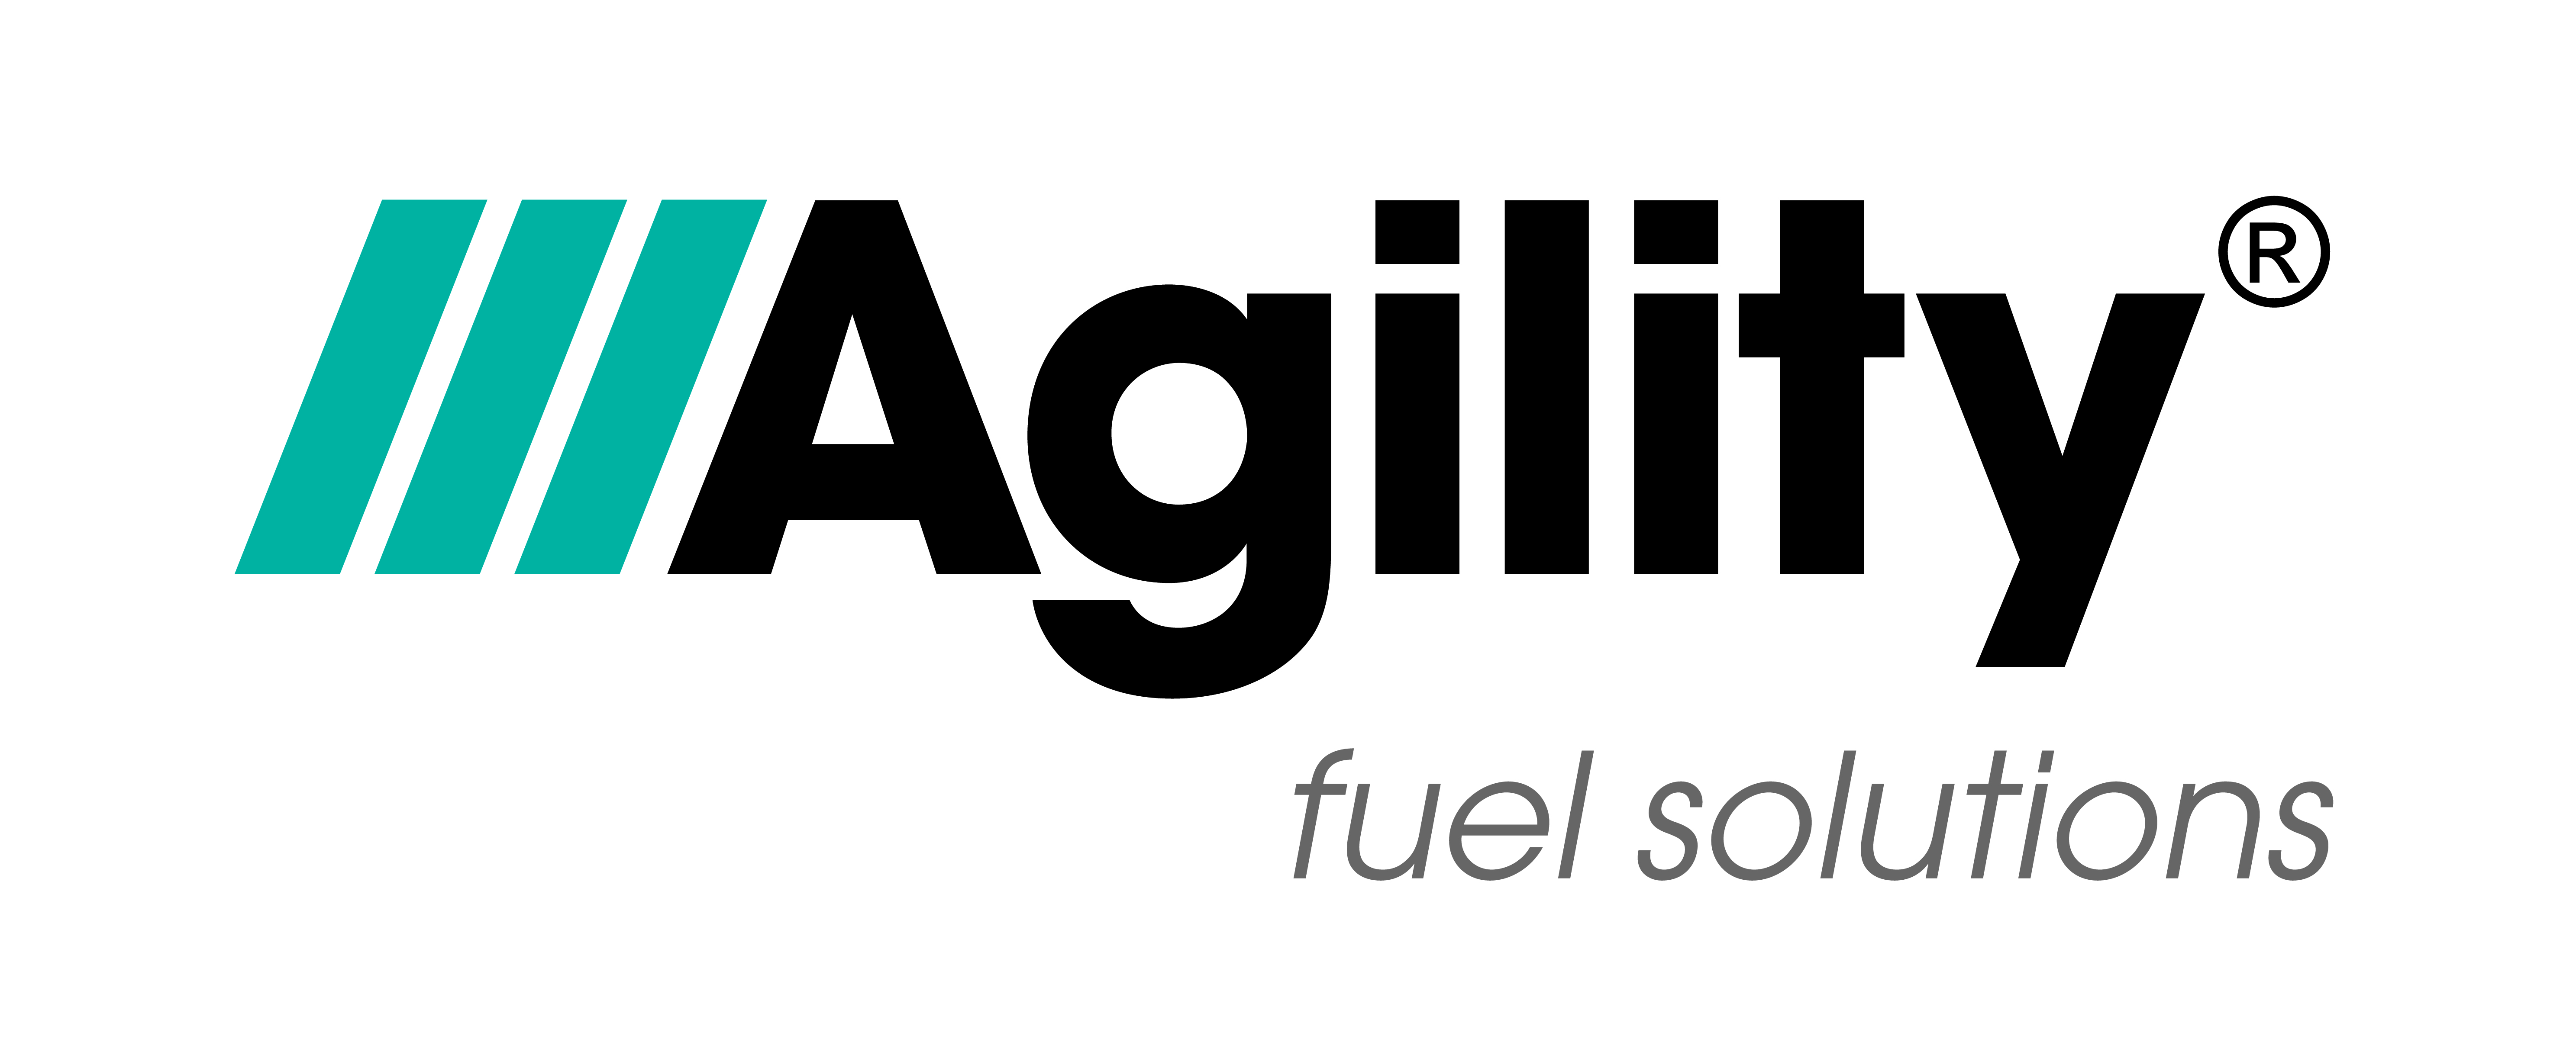 Agility Launches Adv